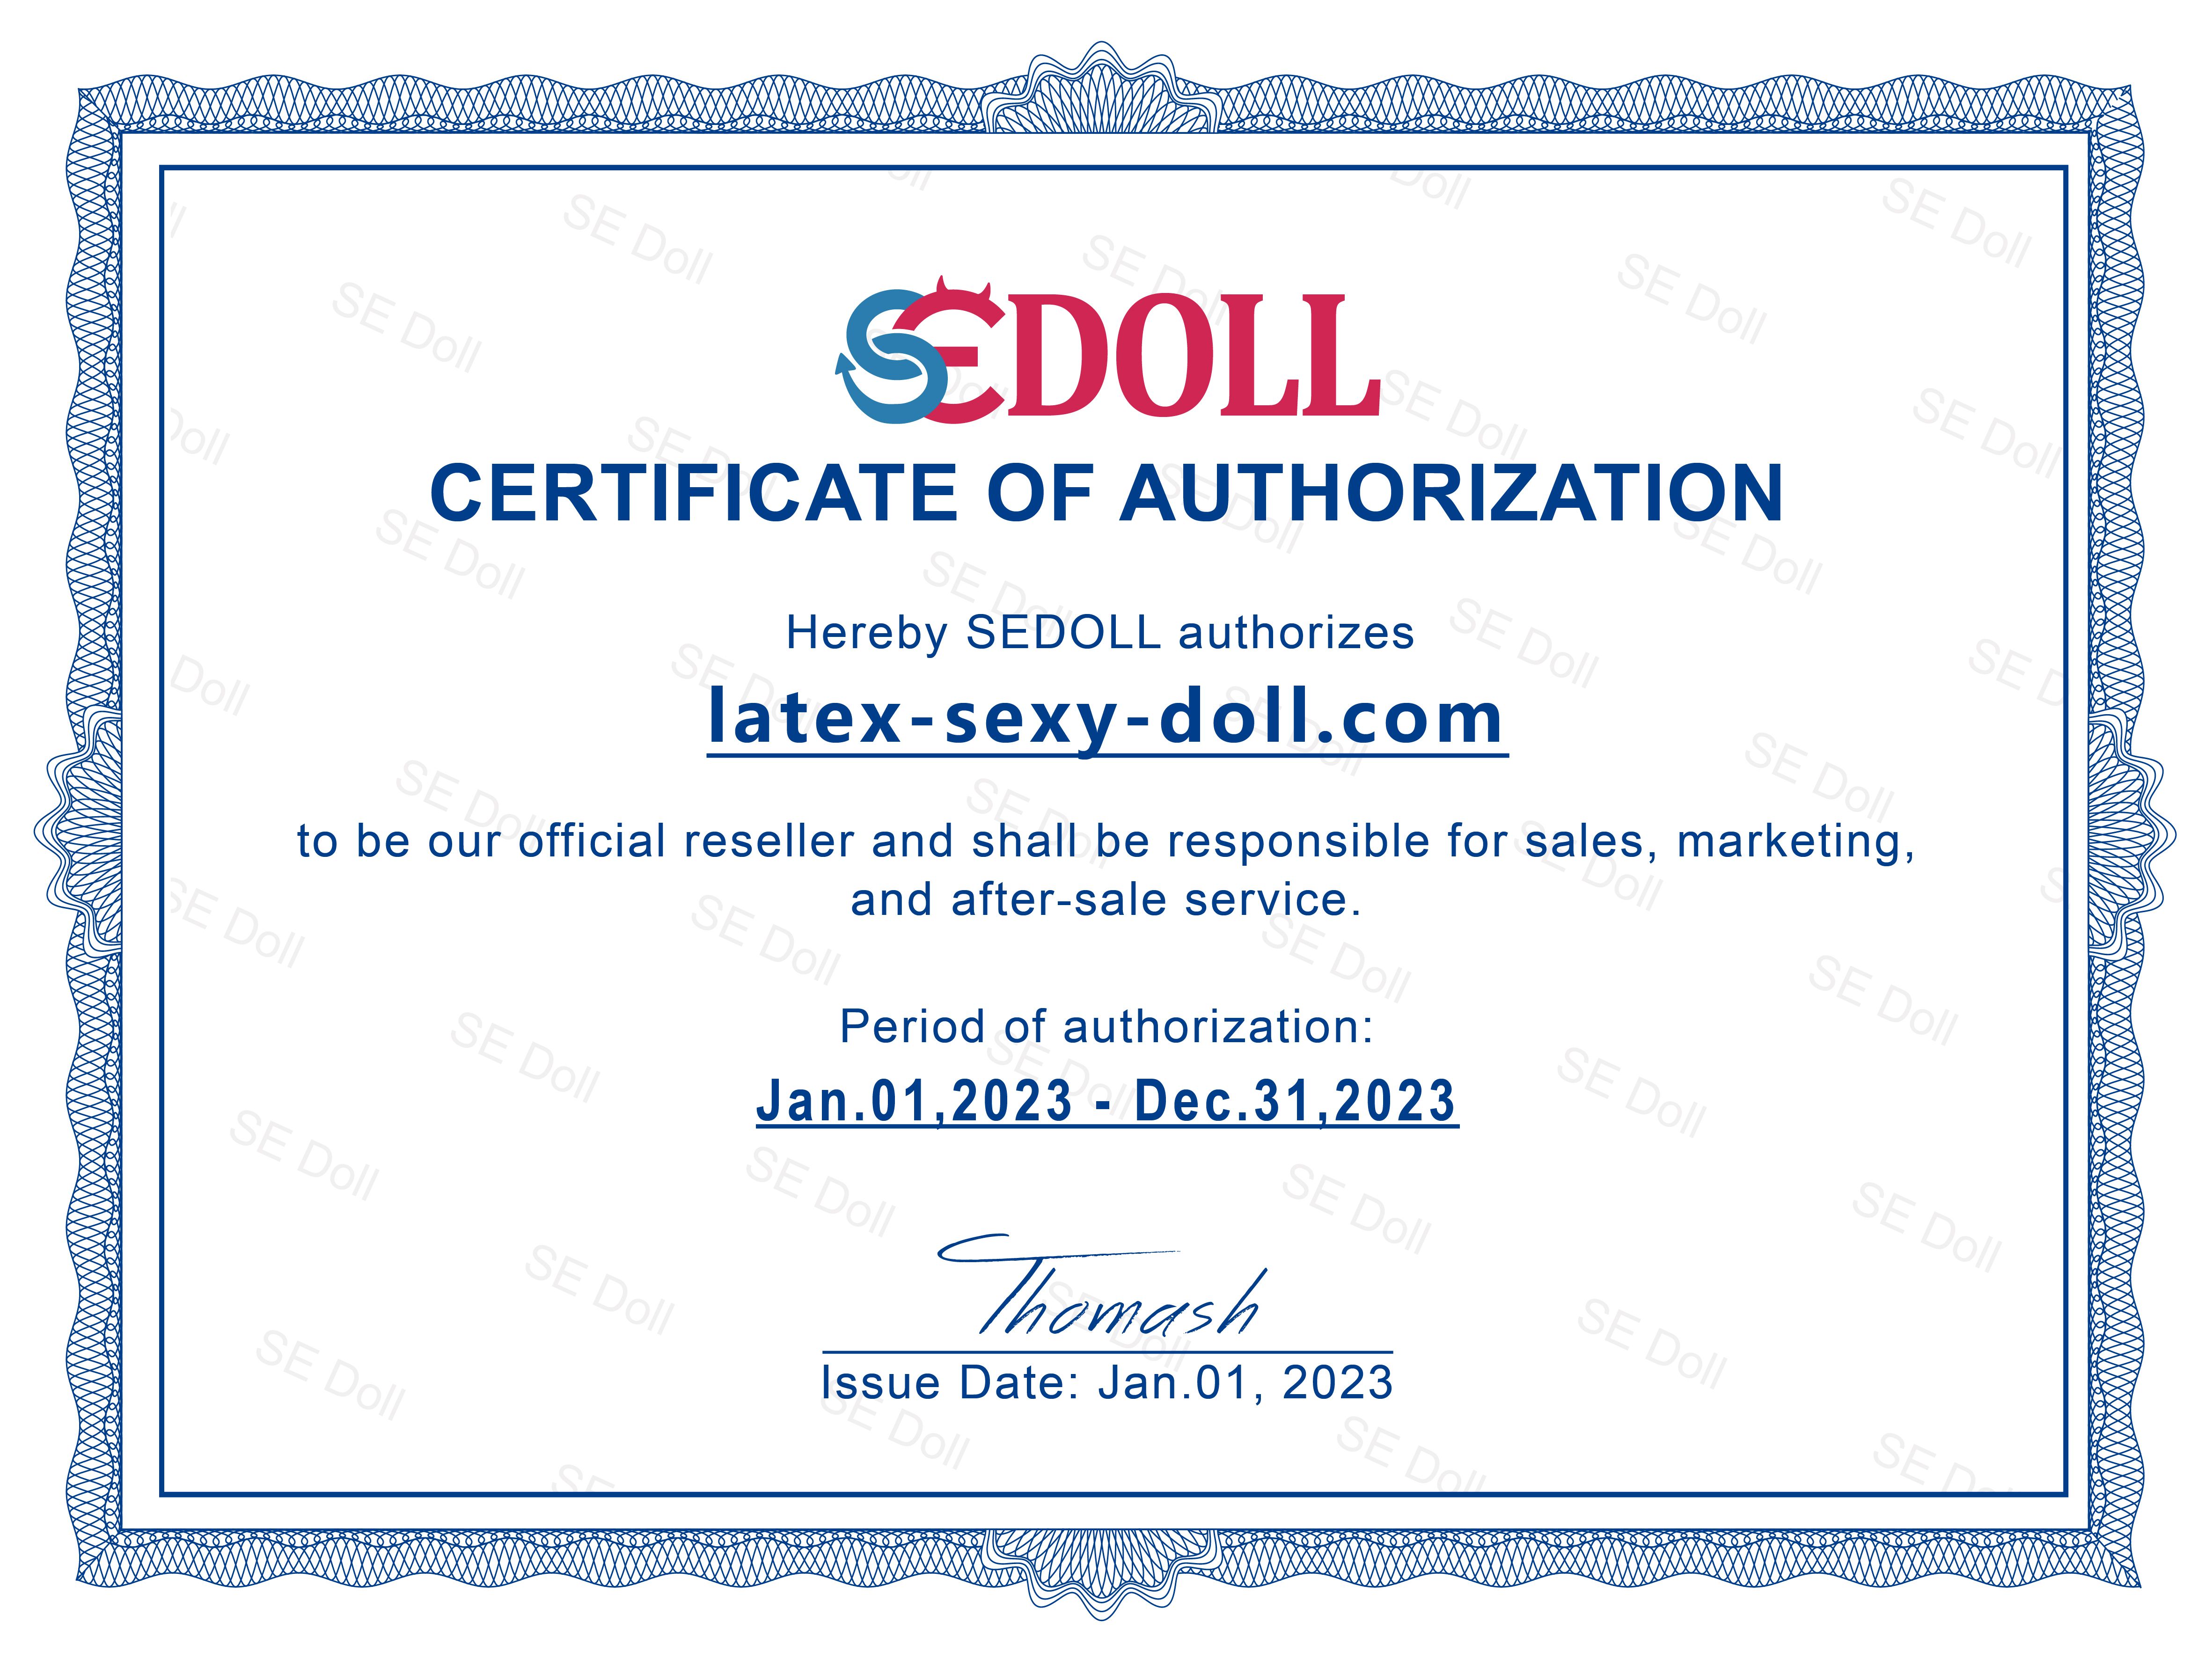 SEDoll Certificat